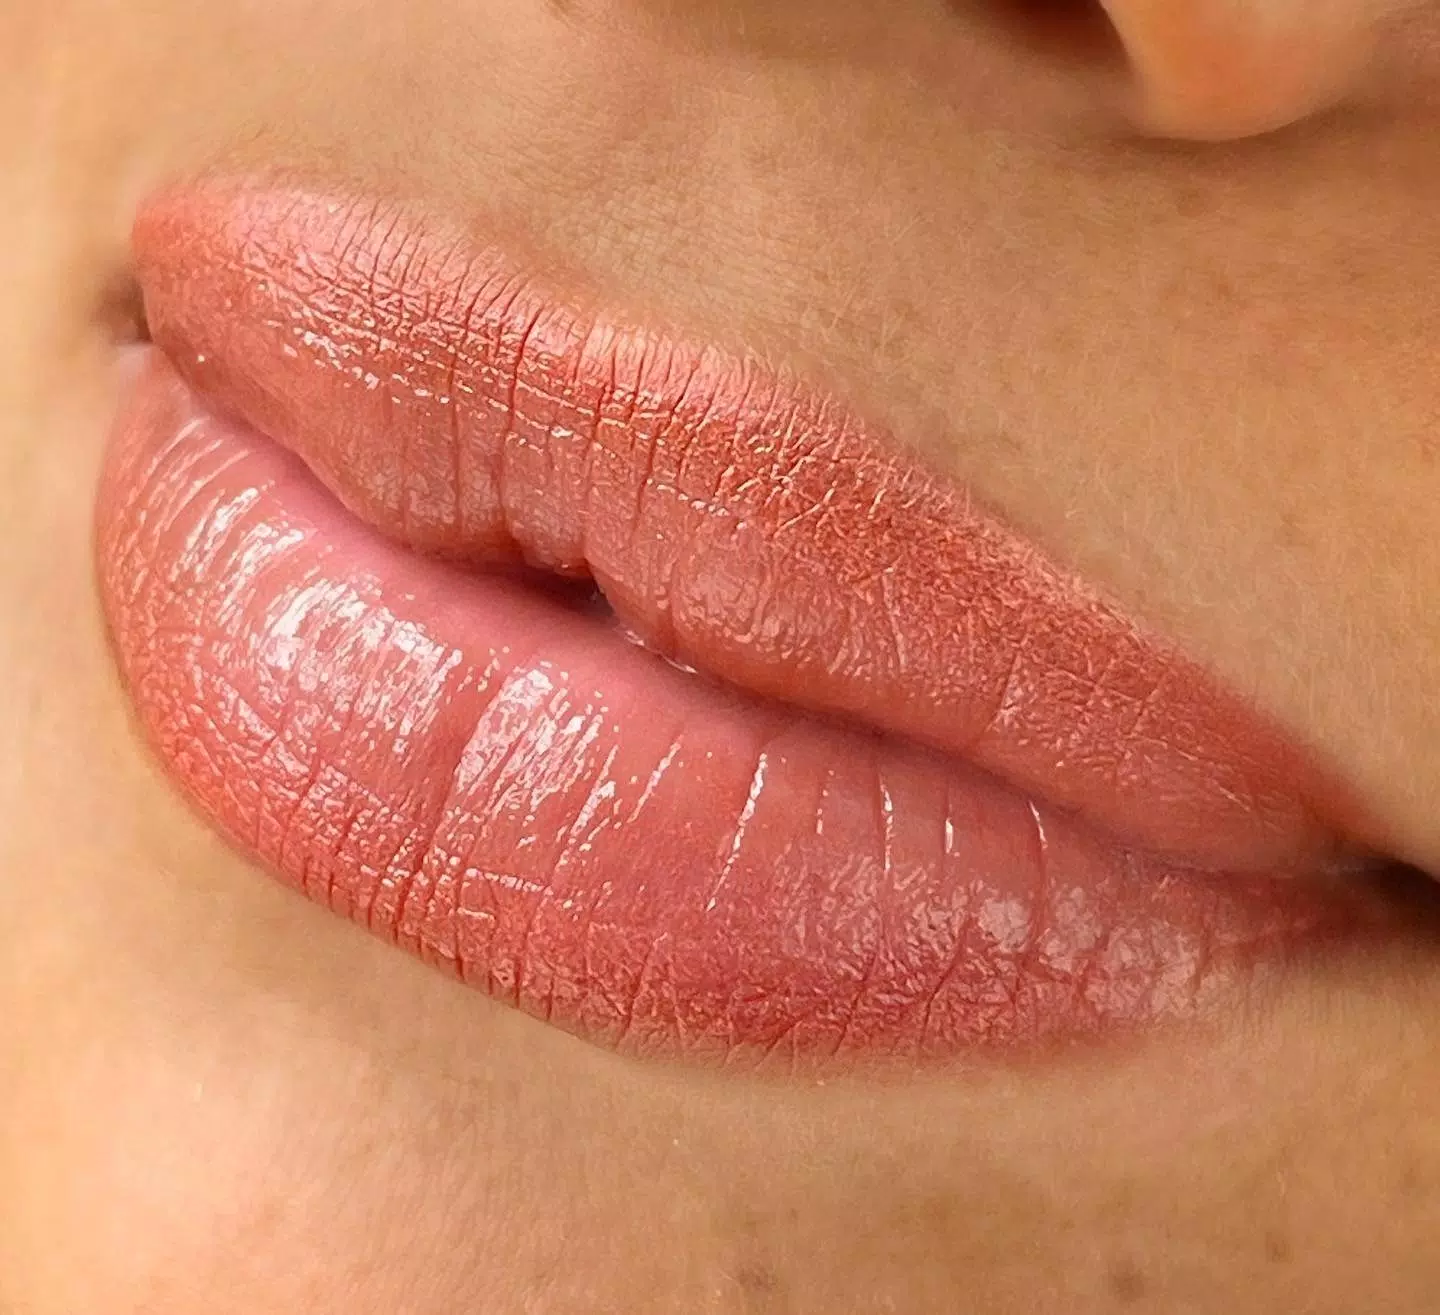 #lippen #pmu #pigmentierung #permanentmakeup #lips #transformation #kosmetik #beauty #swisscolor #toplines #bremgarten  
Termine&Infos www.toplines.ch ⚡️